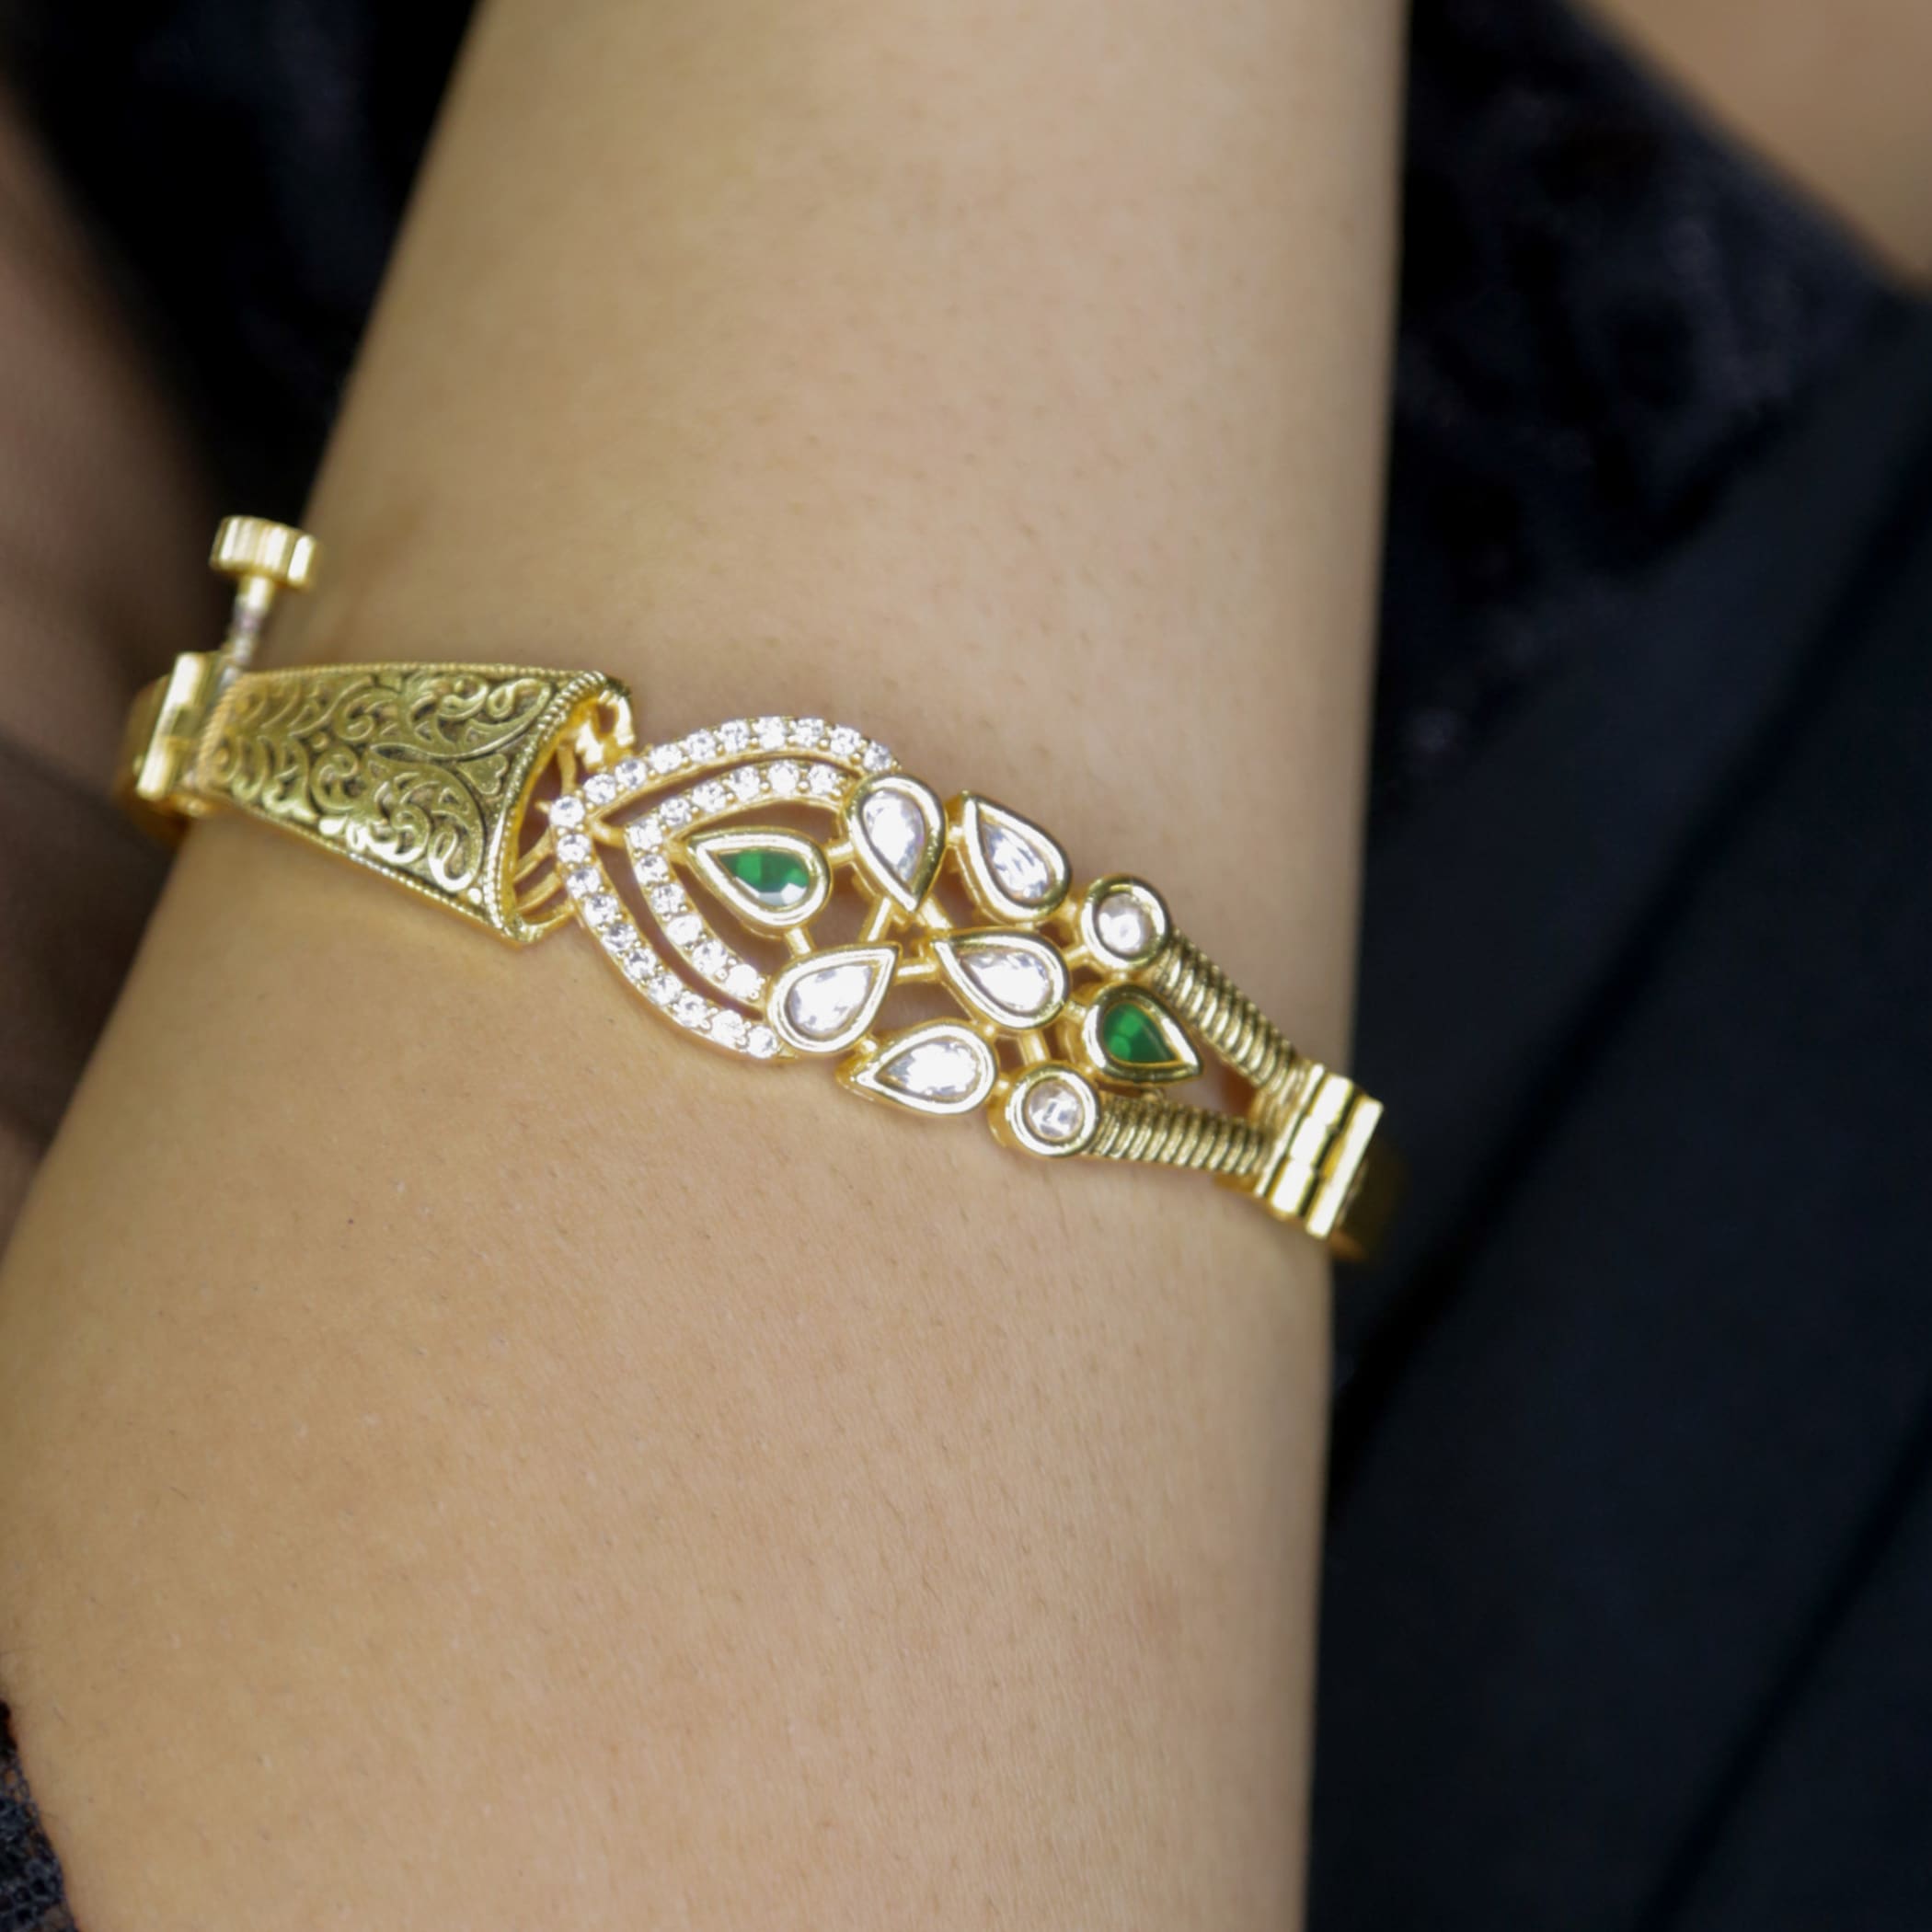 Bangle bracelet gold plated indian jewellary kada golden